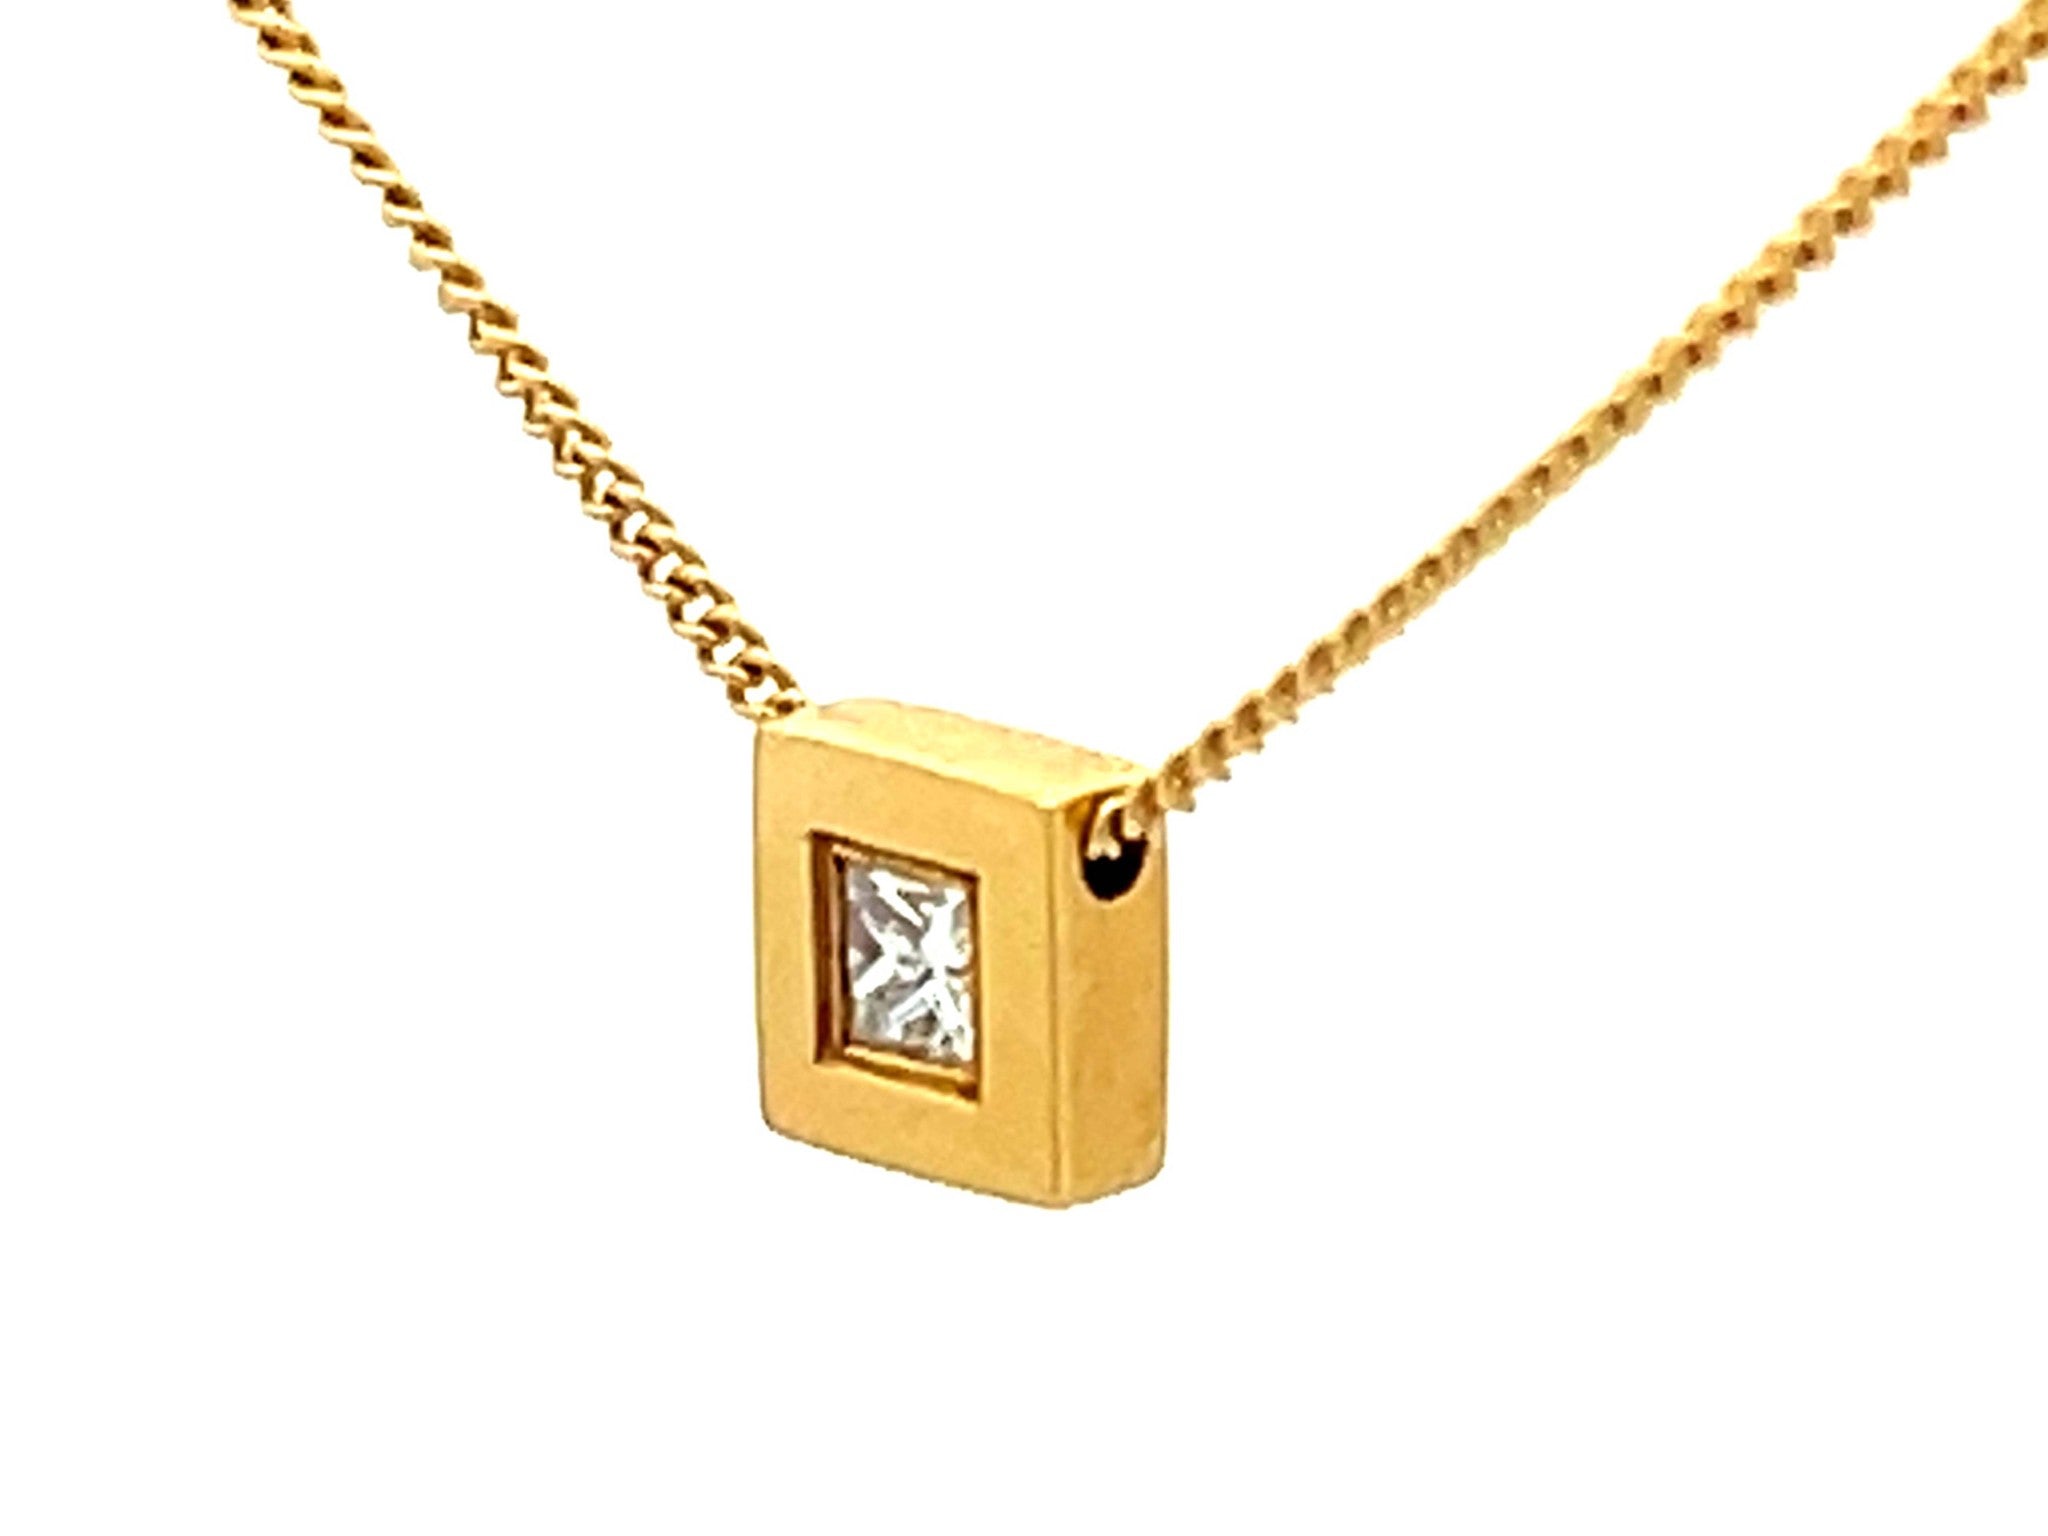 Small Square Single Diamond Necklace in 18k Yellow Gold